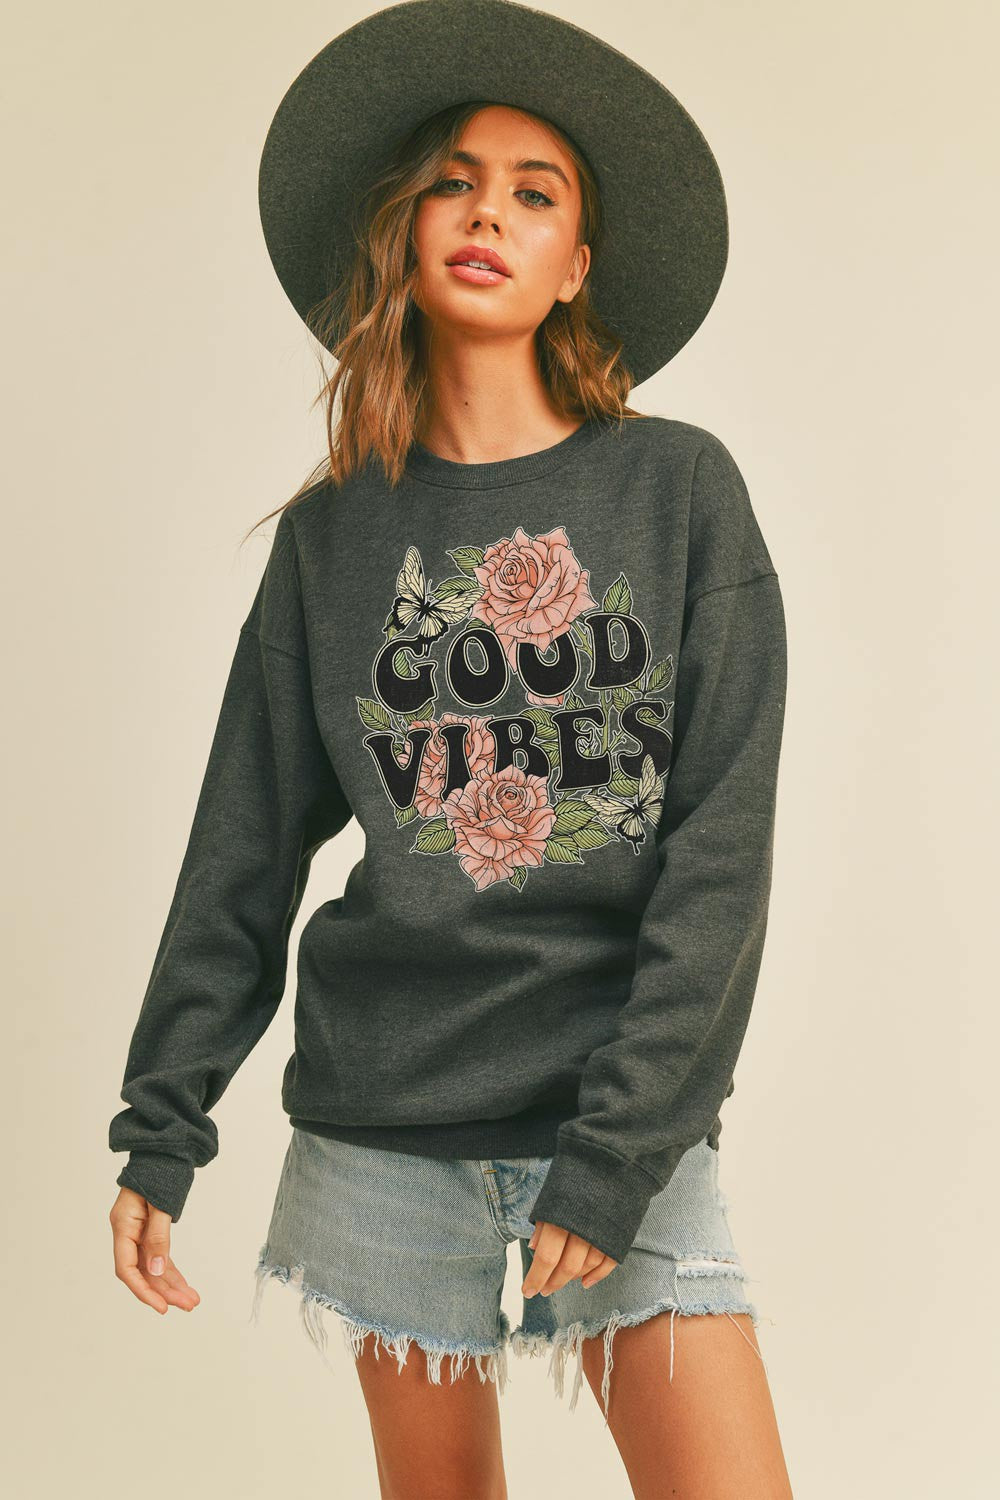 Dakota Good Vibes Graphic Sweatshirt FINAL SALE